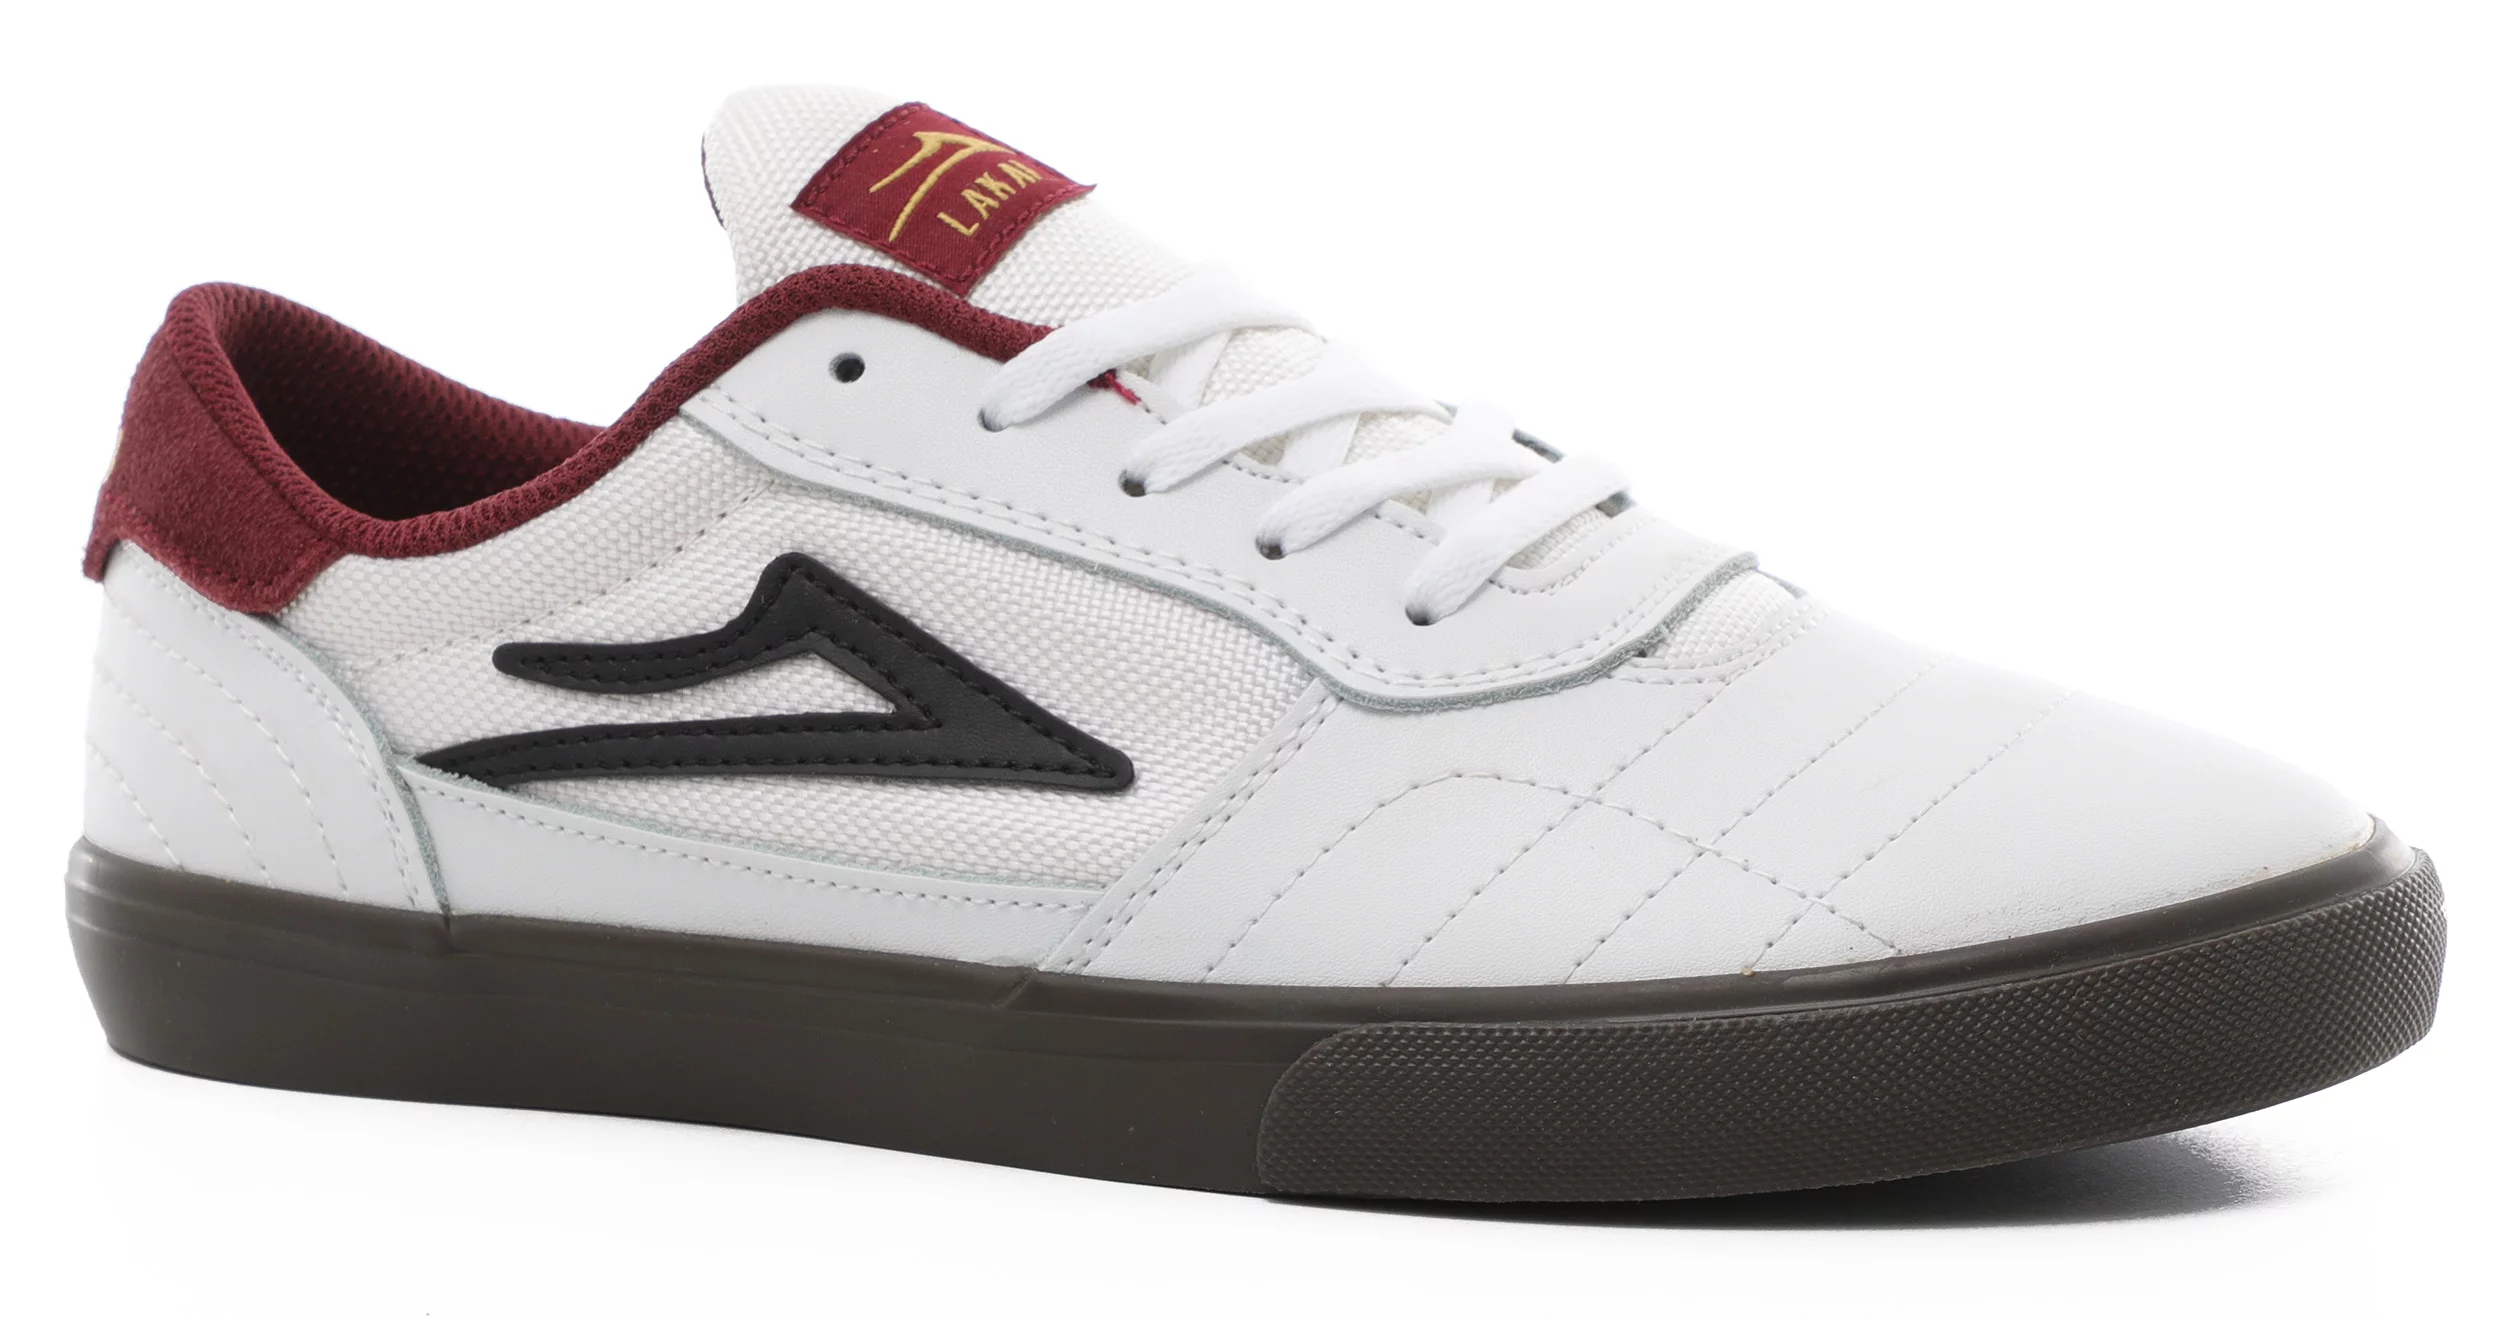 Lakai Kids Cambridge Skate Shoes - white/gum leather | Tactics